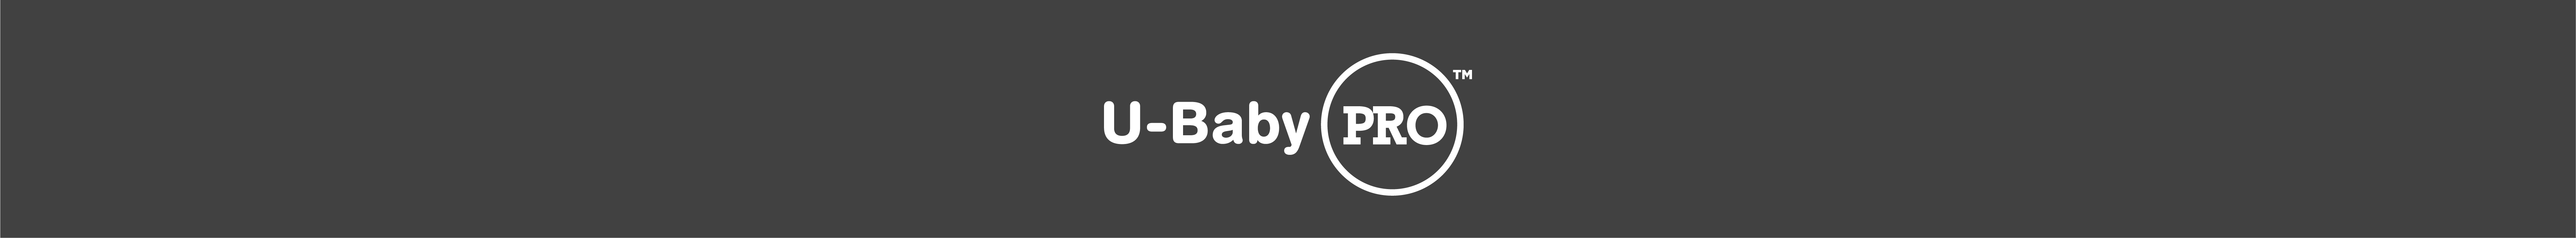 U-Baby PRO logo bar-02